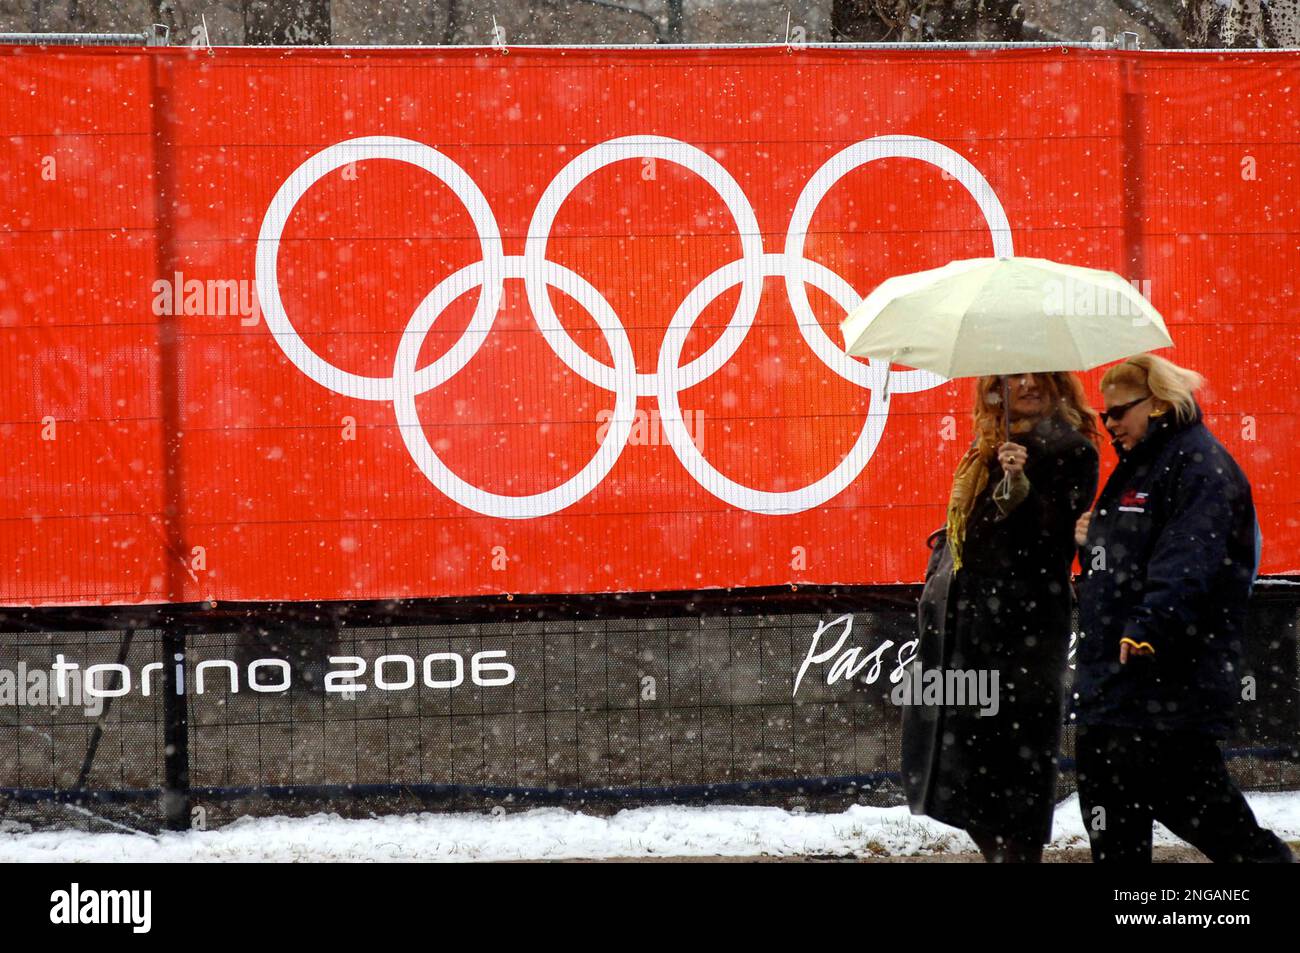 Winter Olympics past